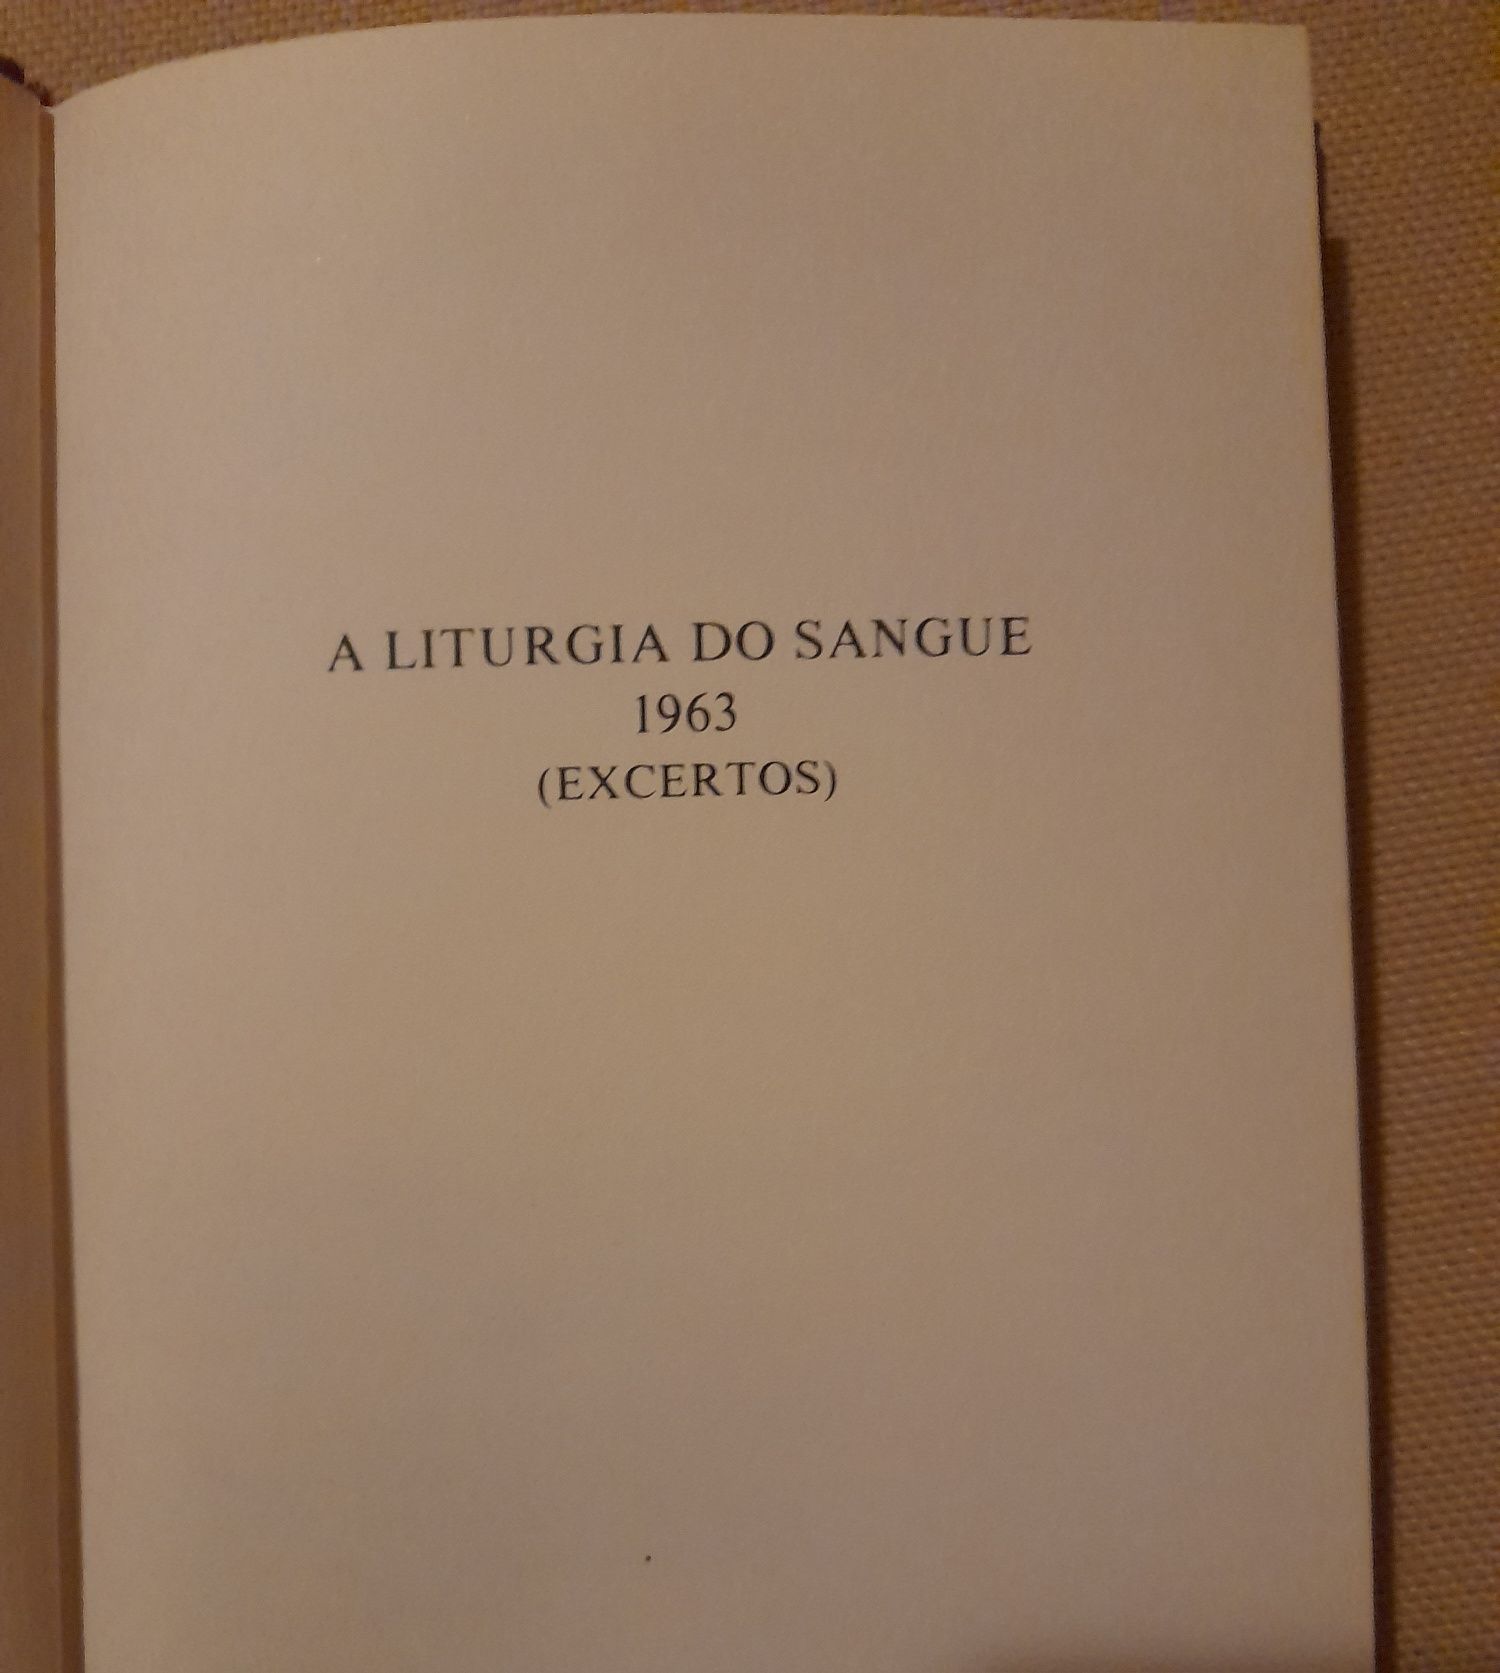 Ary dos Santos "Vinte anos de poesia"